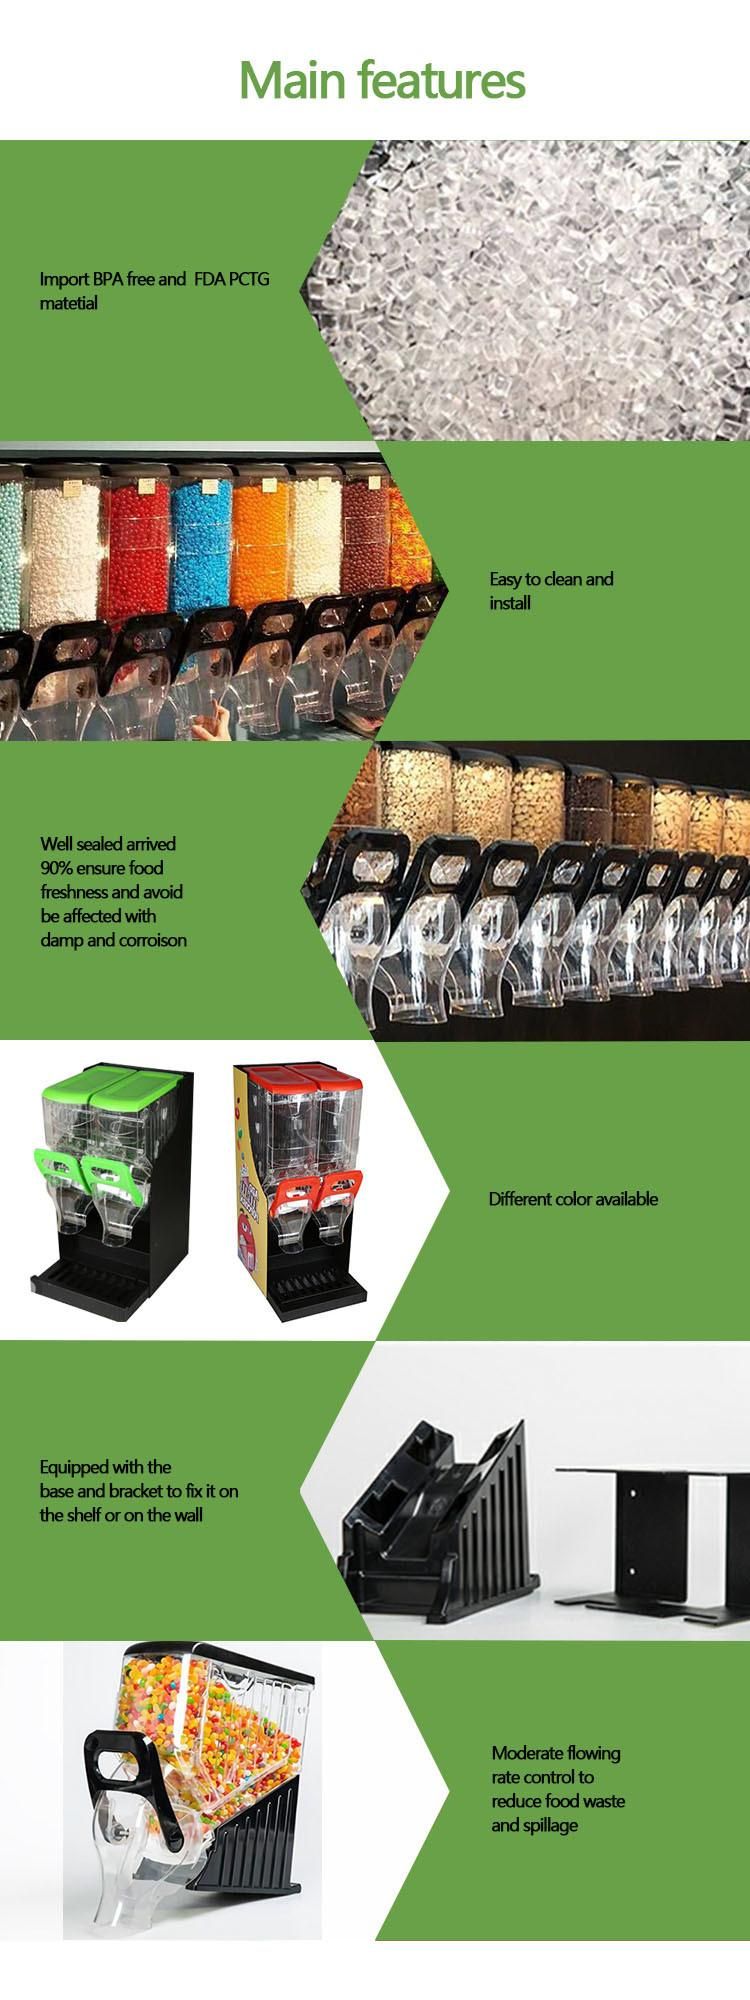 Wholesale Food Dispenser for Supermarket From Ecobox